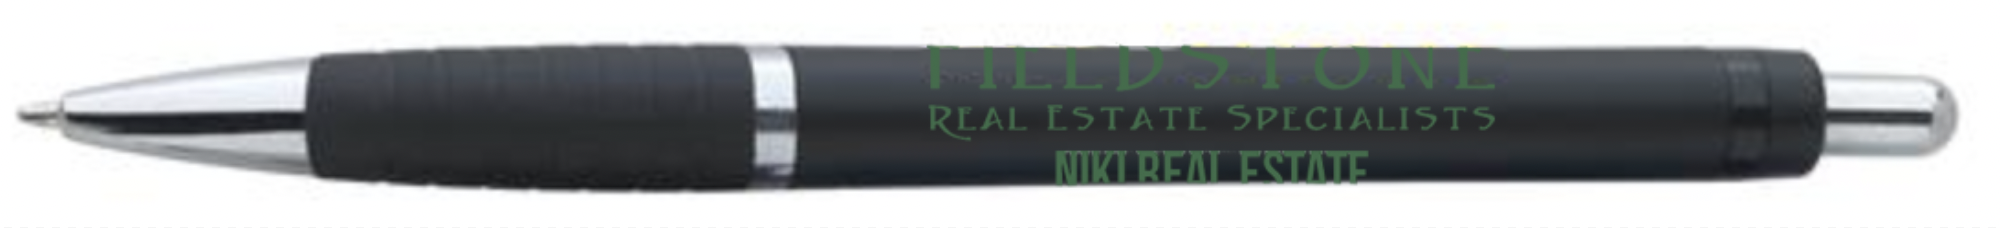 Niki Real Estate Pens